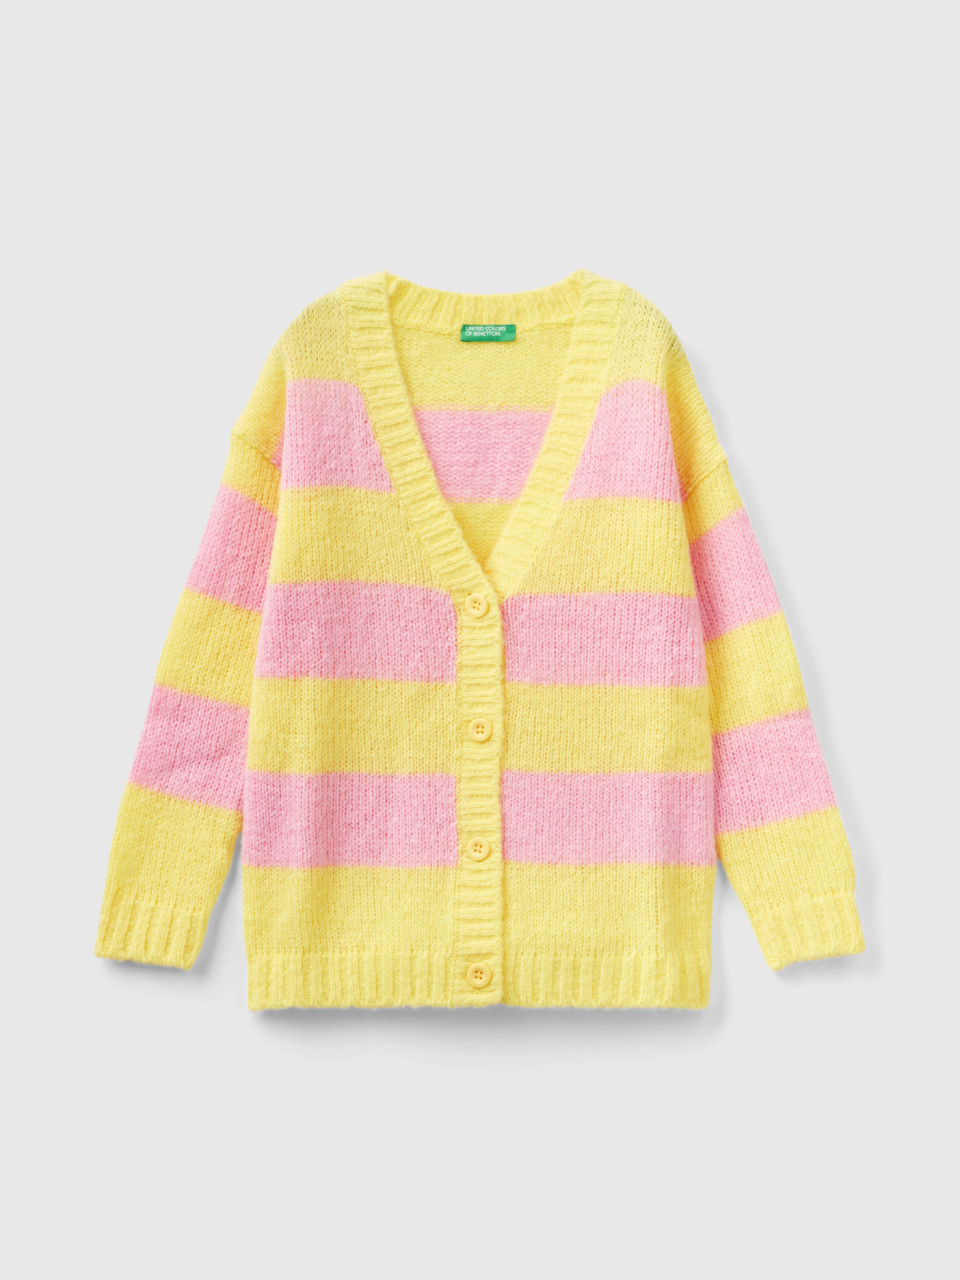 Benetton, Two-tone Striped Cardigan, Yellow, Kids